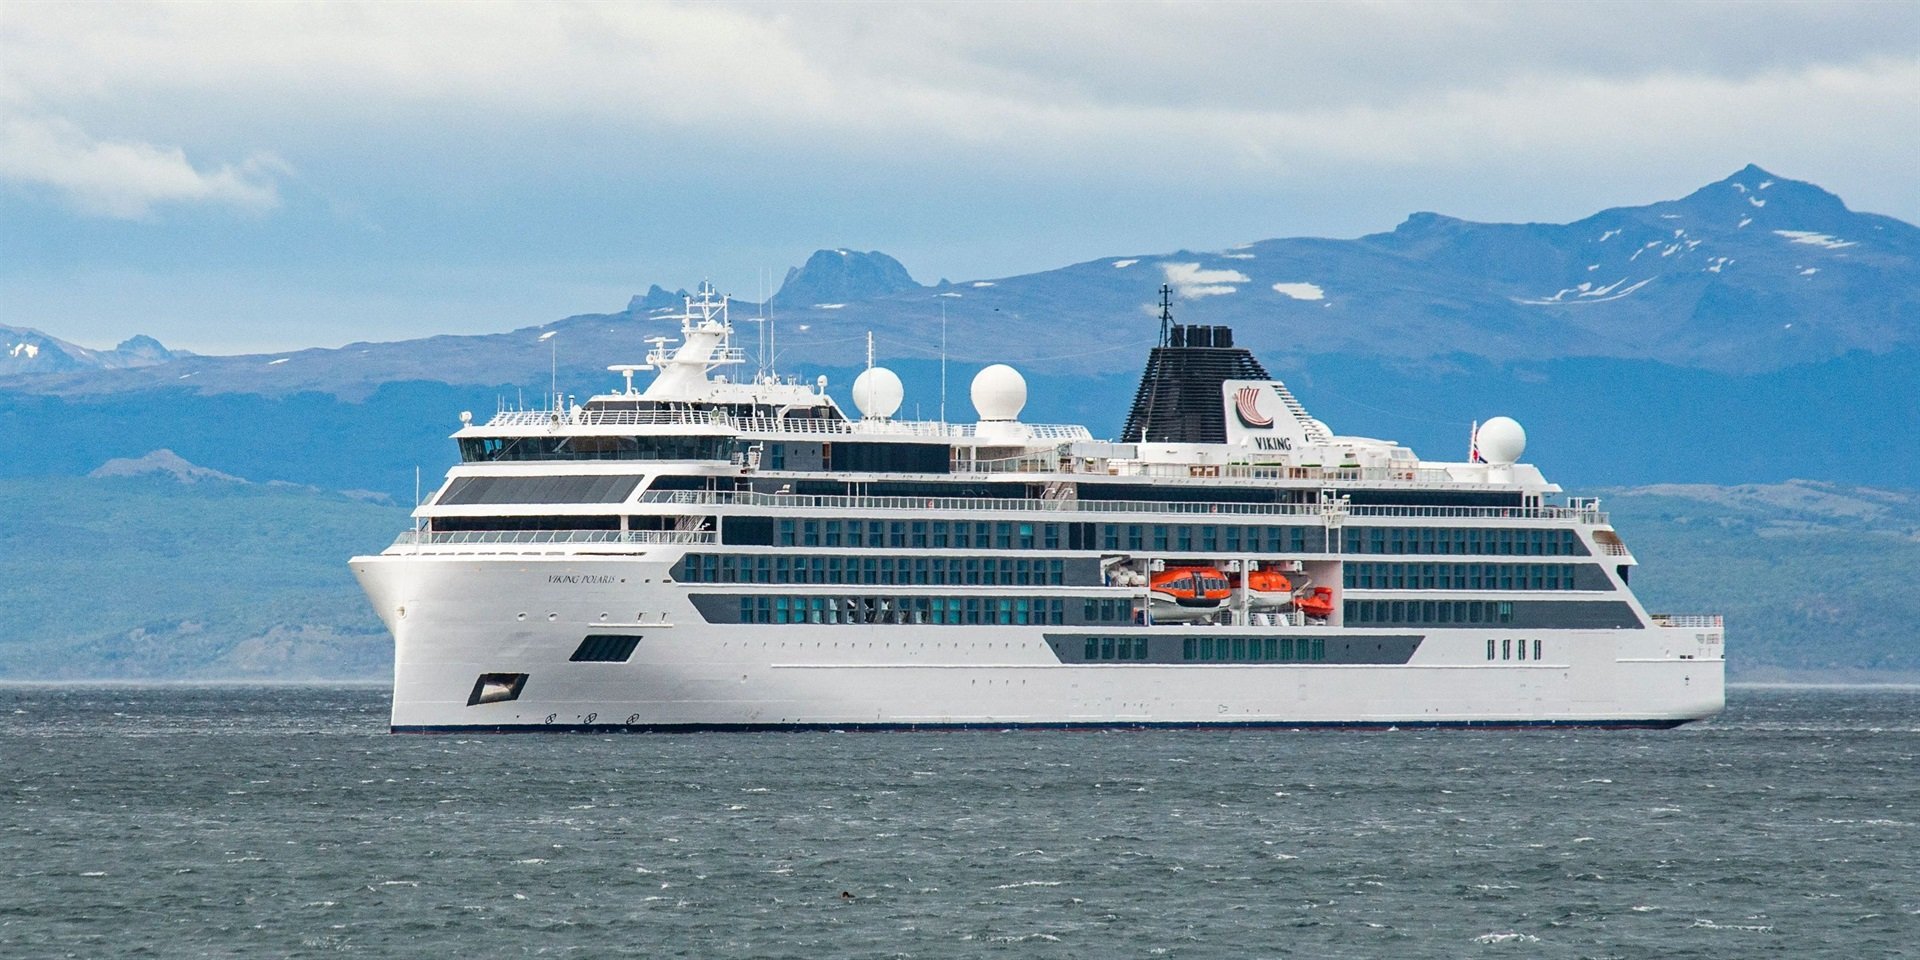 A 'rogue wave' hit a cruise ship heading towards Antarctica – killing a passenger, injuring 4 more | Business Insider